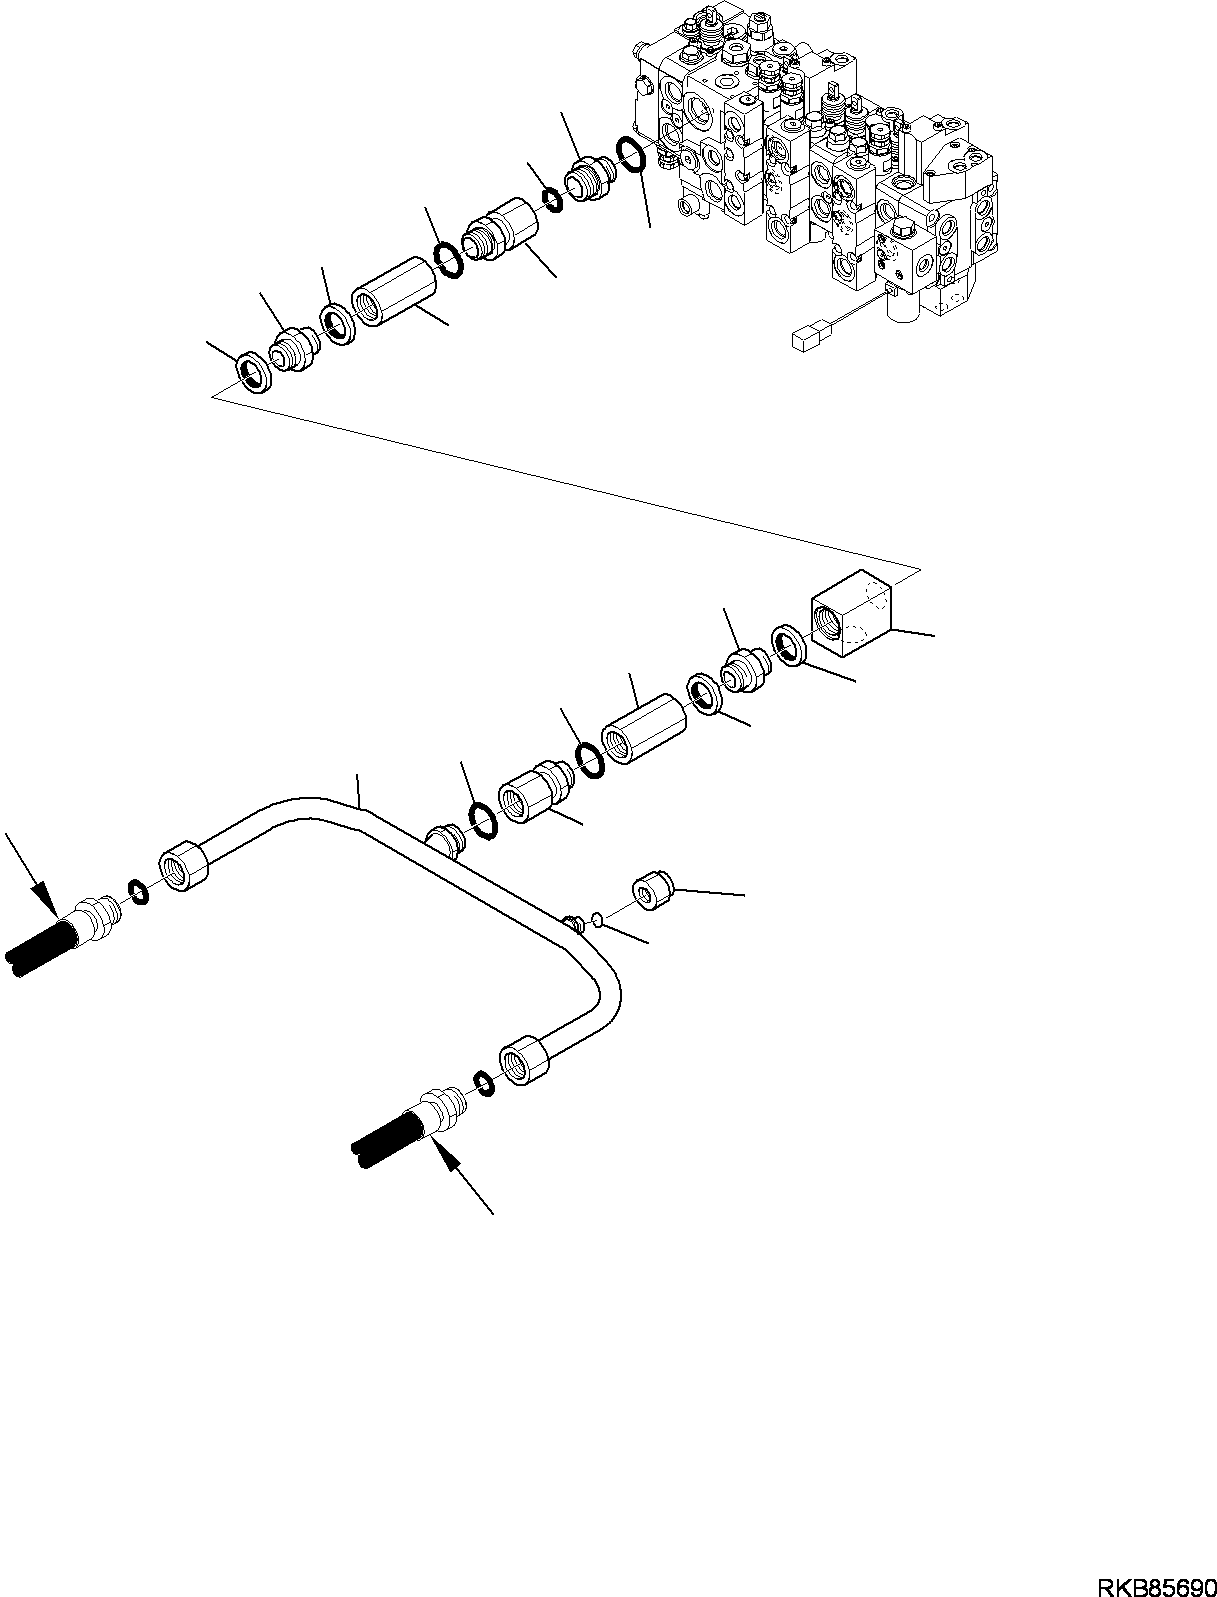 Part 38. HYDRAULIC PIPING (RETURN LINE) (1/5) [6415]